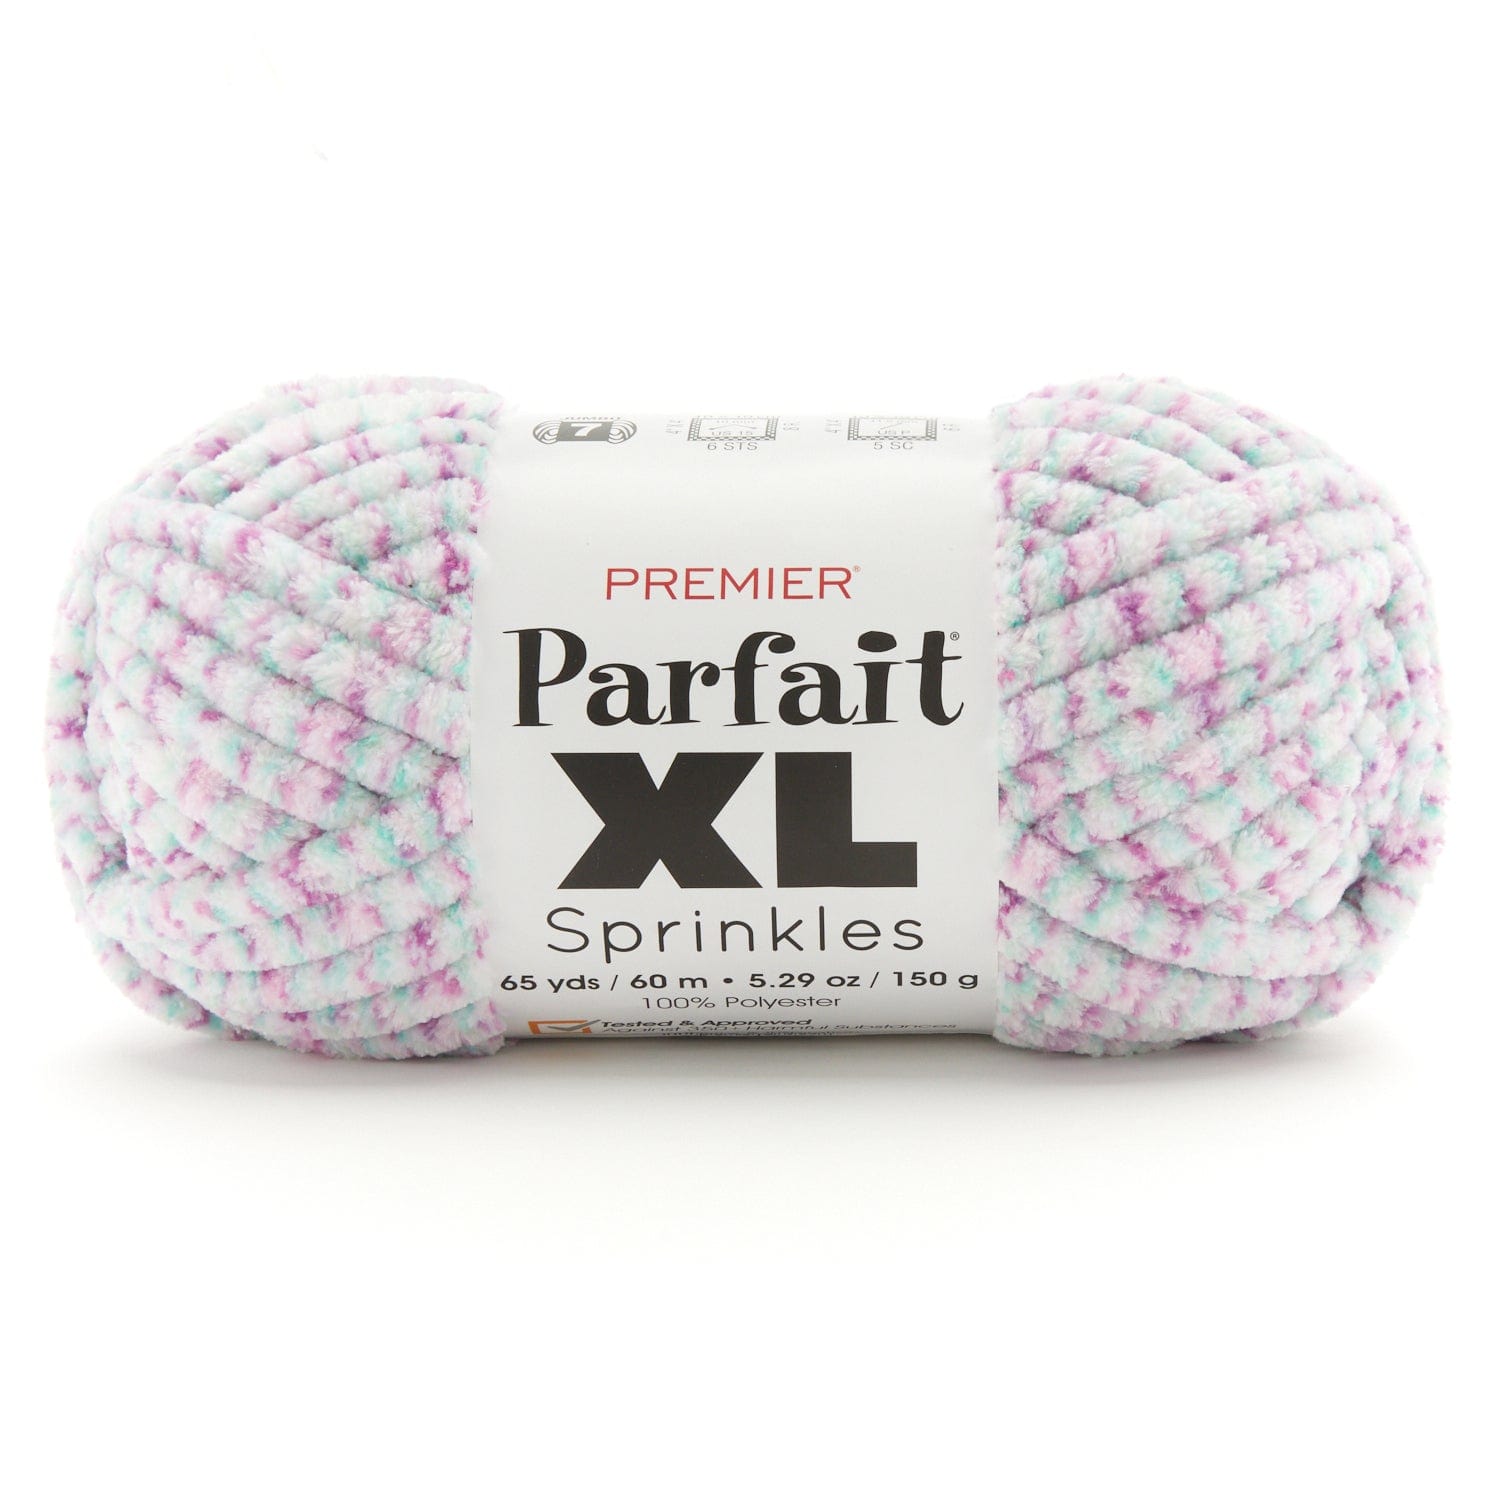 Image of Parfait XL Sprinkles